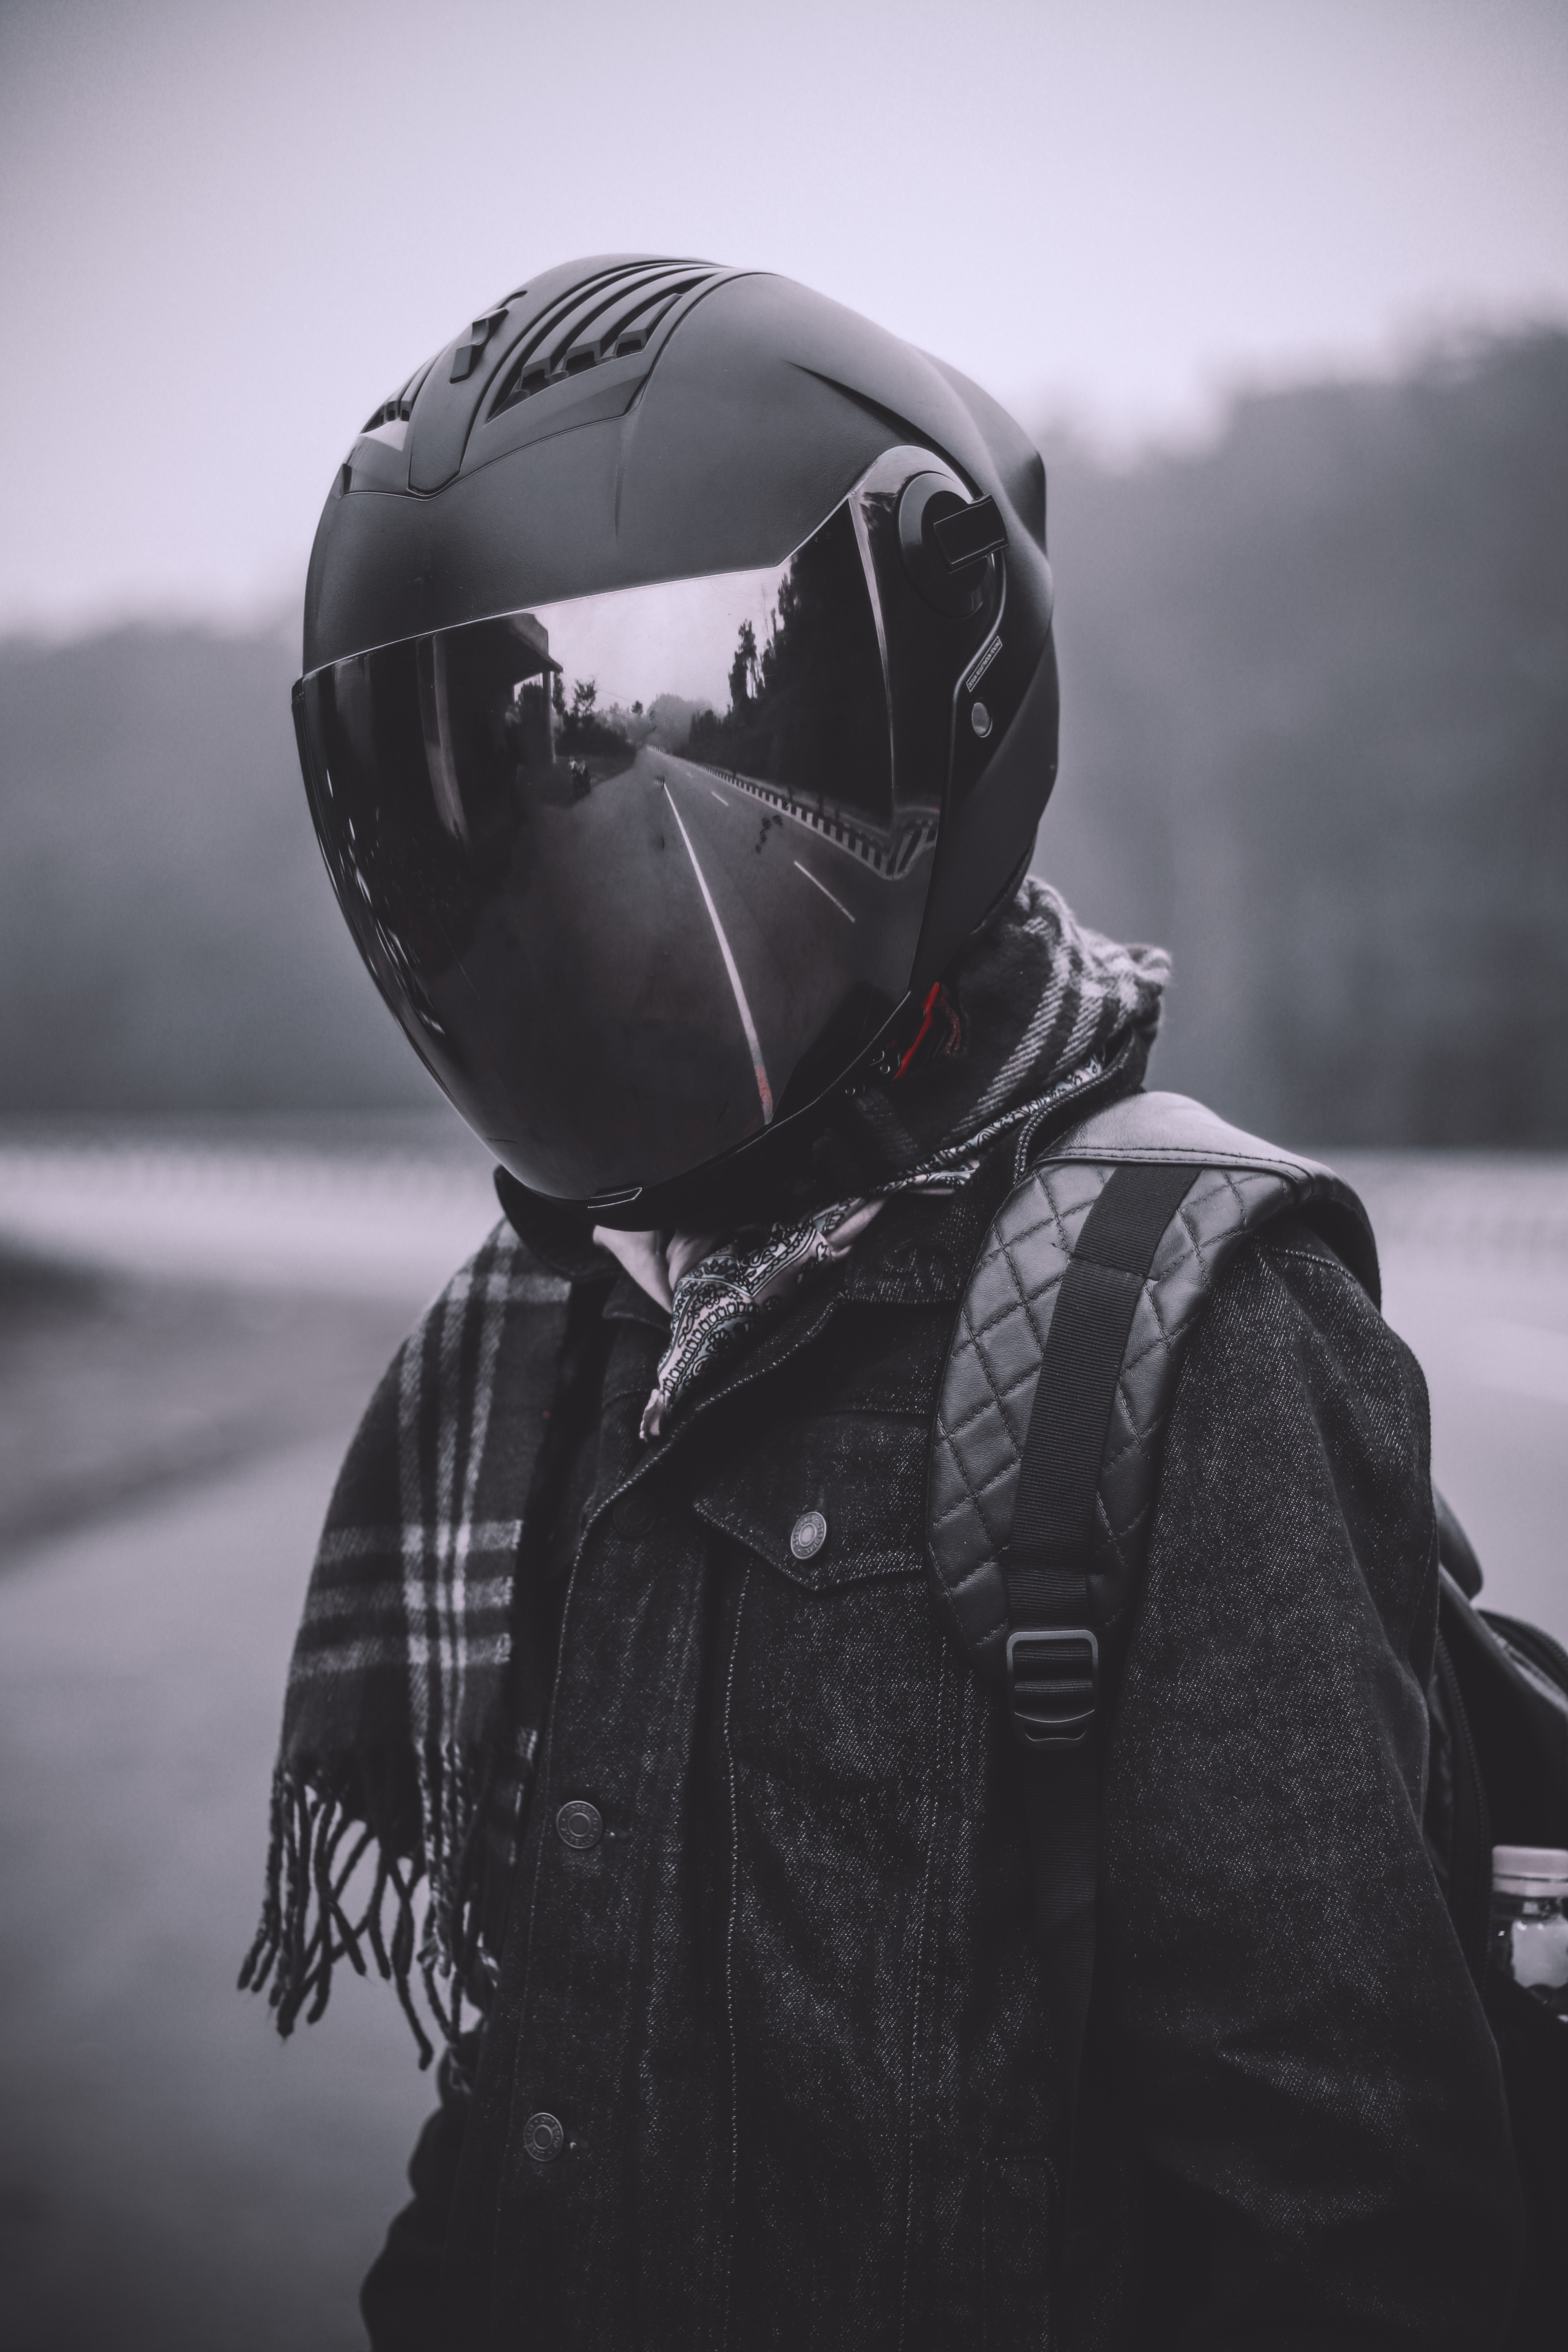 helmet, black, reflection, miscellanea, miscellaneous, human, person